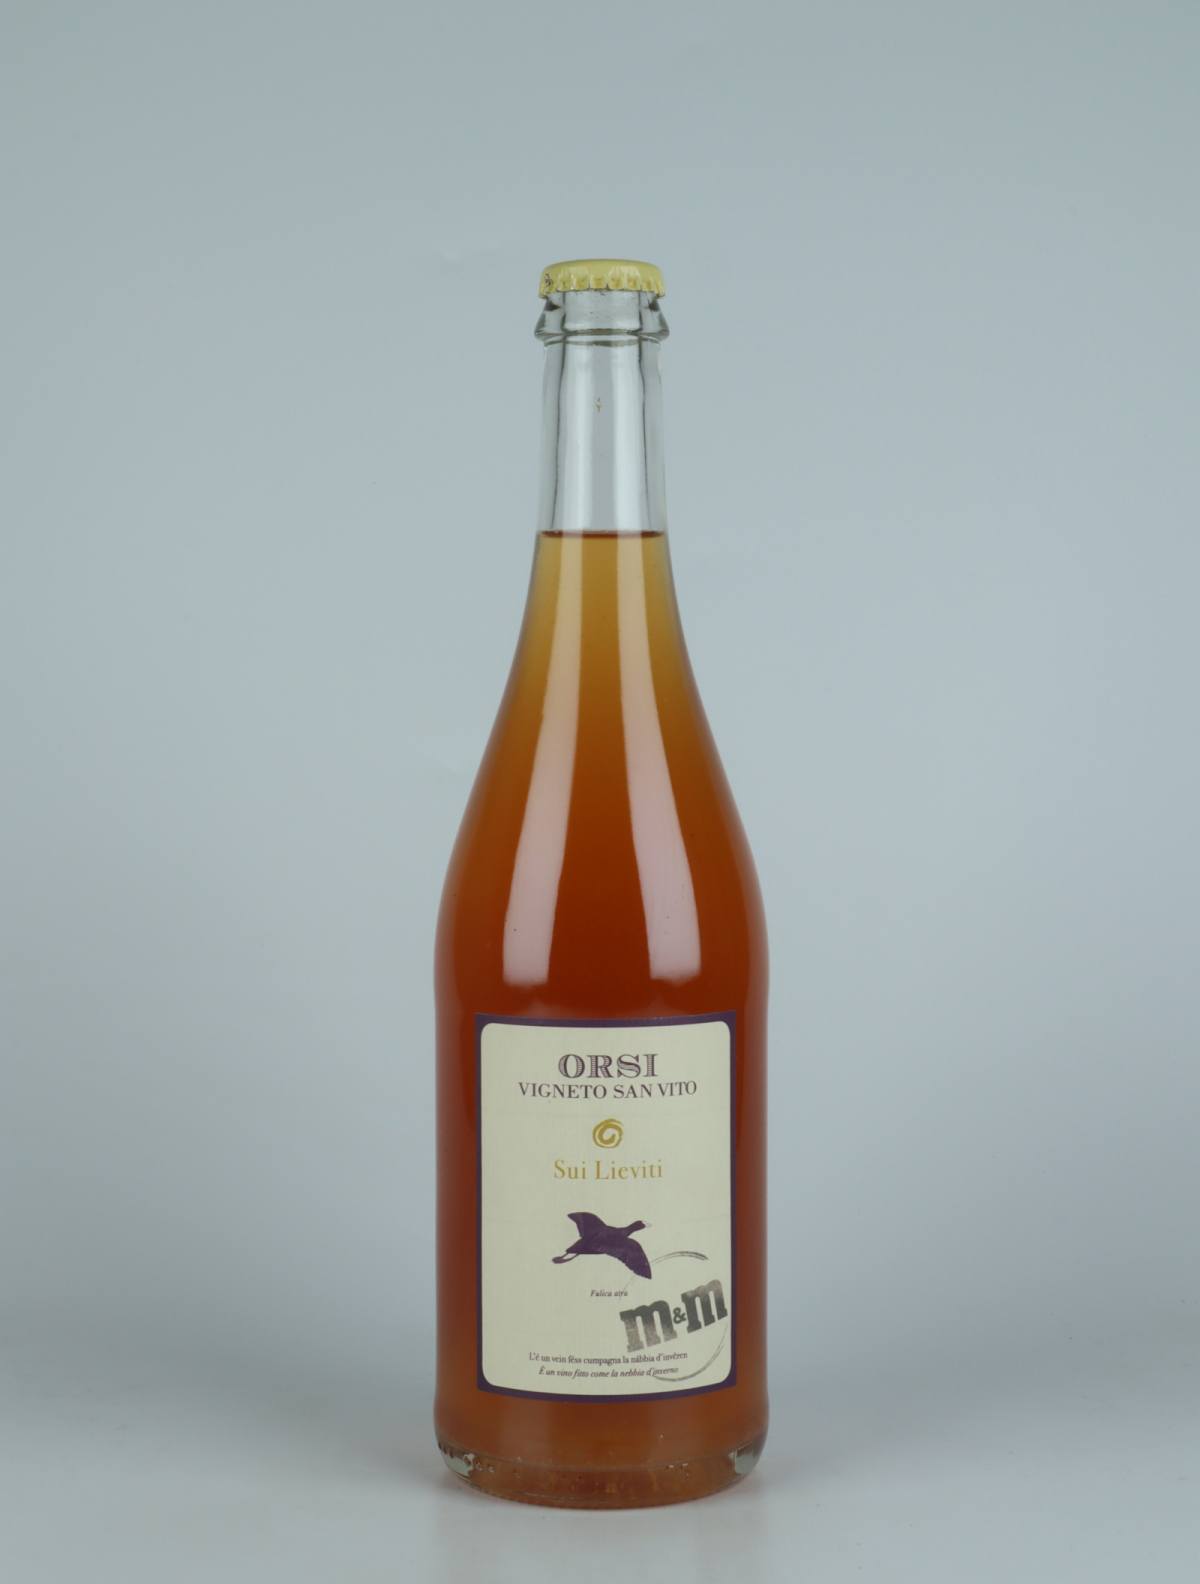 A bottle 2021 Sui Lieviti M&M's Sparkling from Orsi - San Vito, Emilia-Romagna in Italy